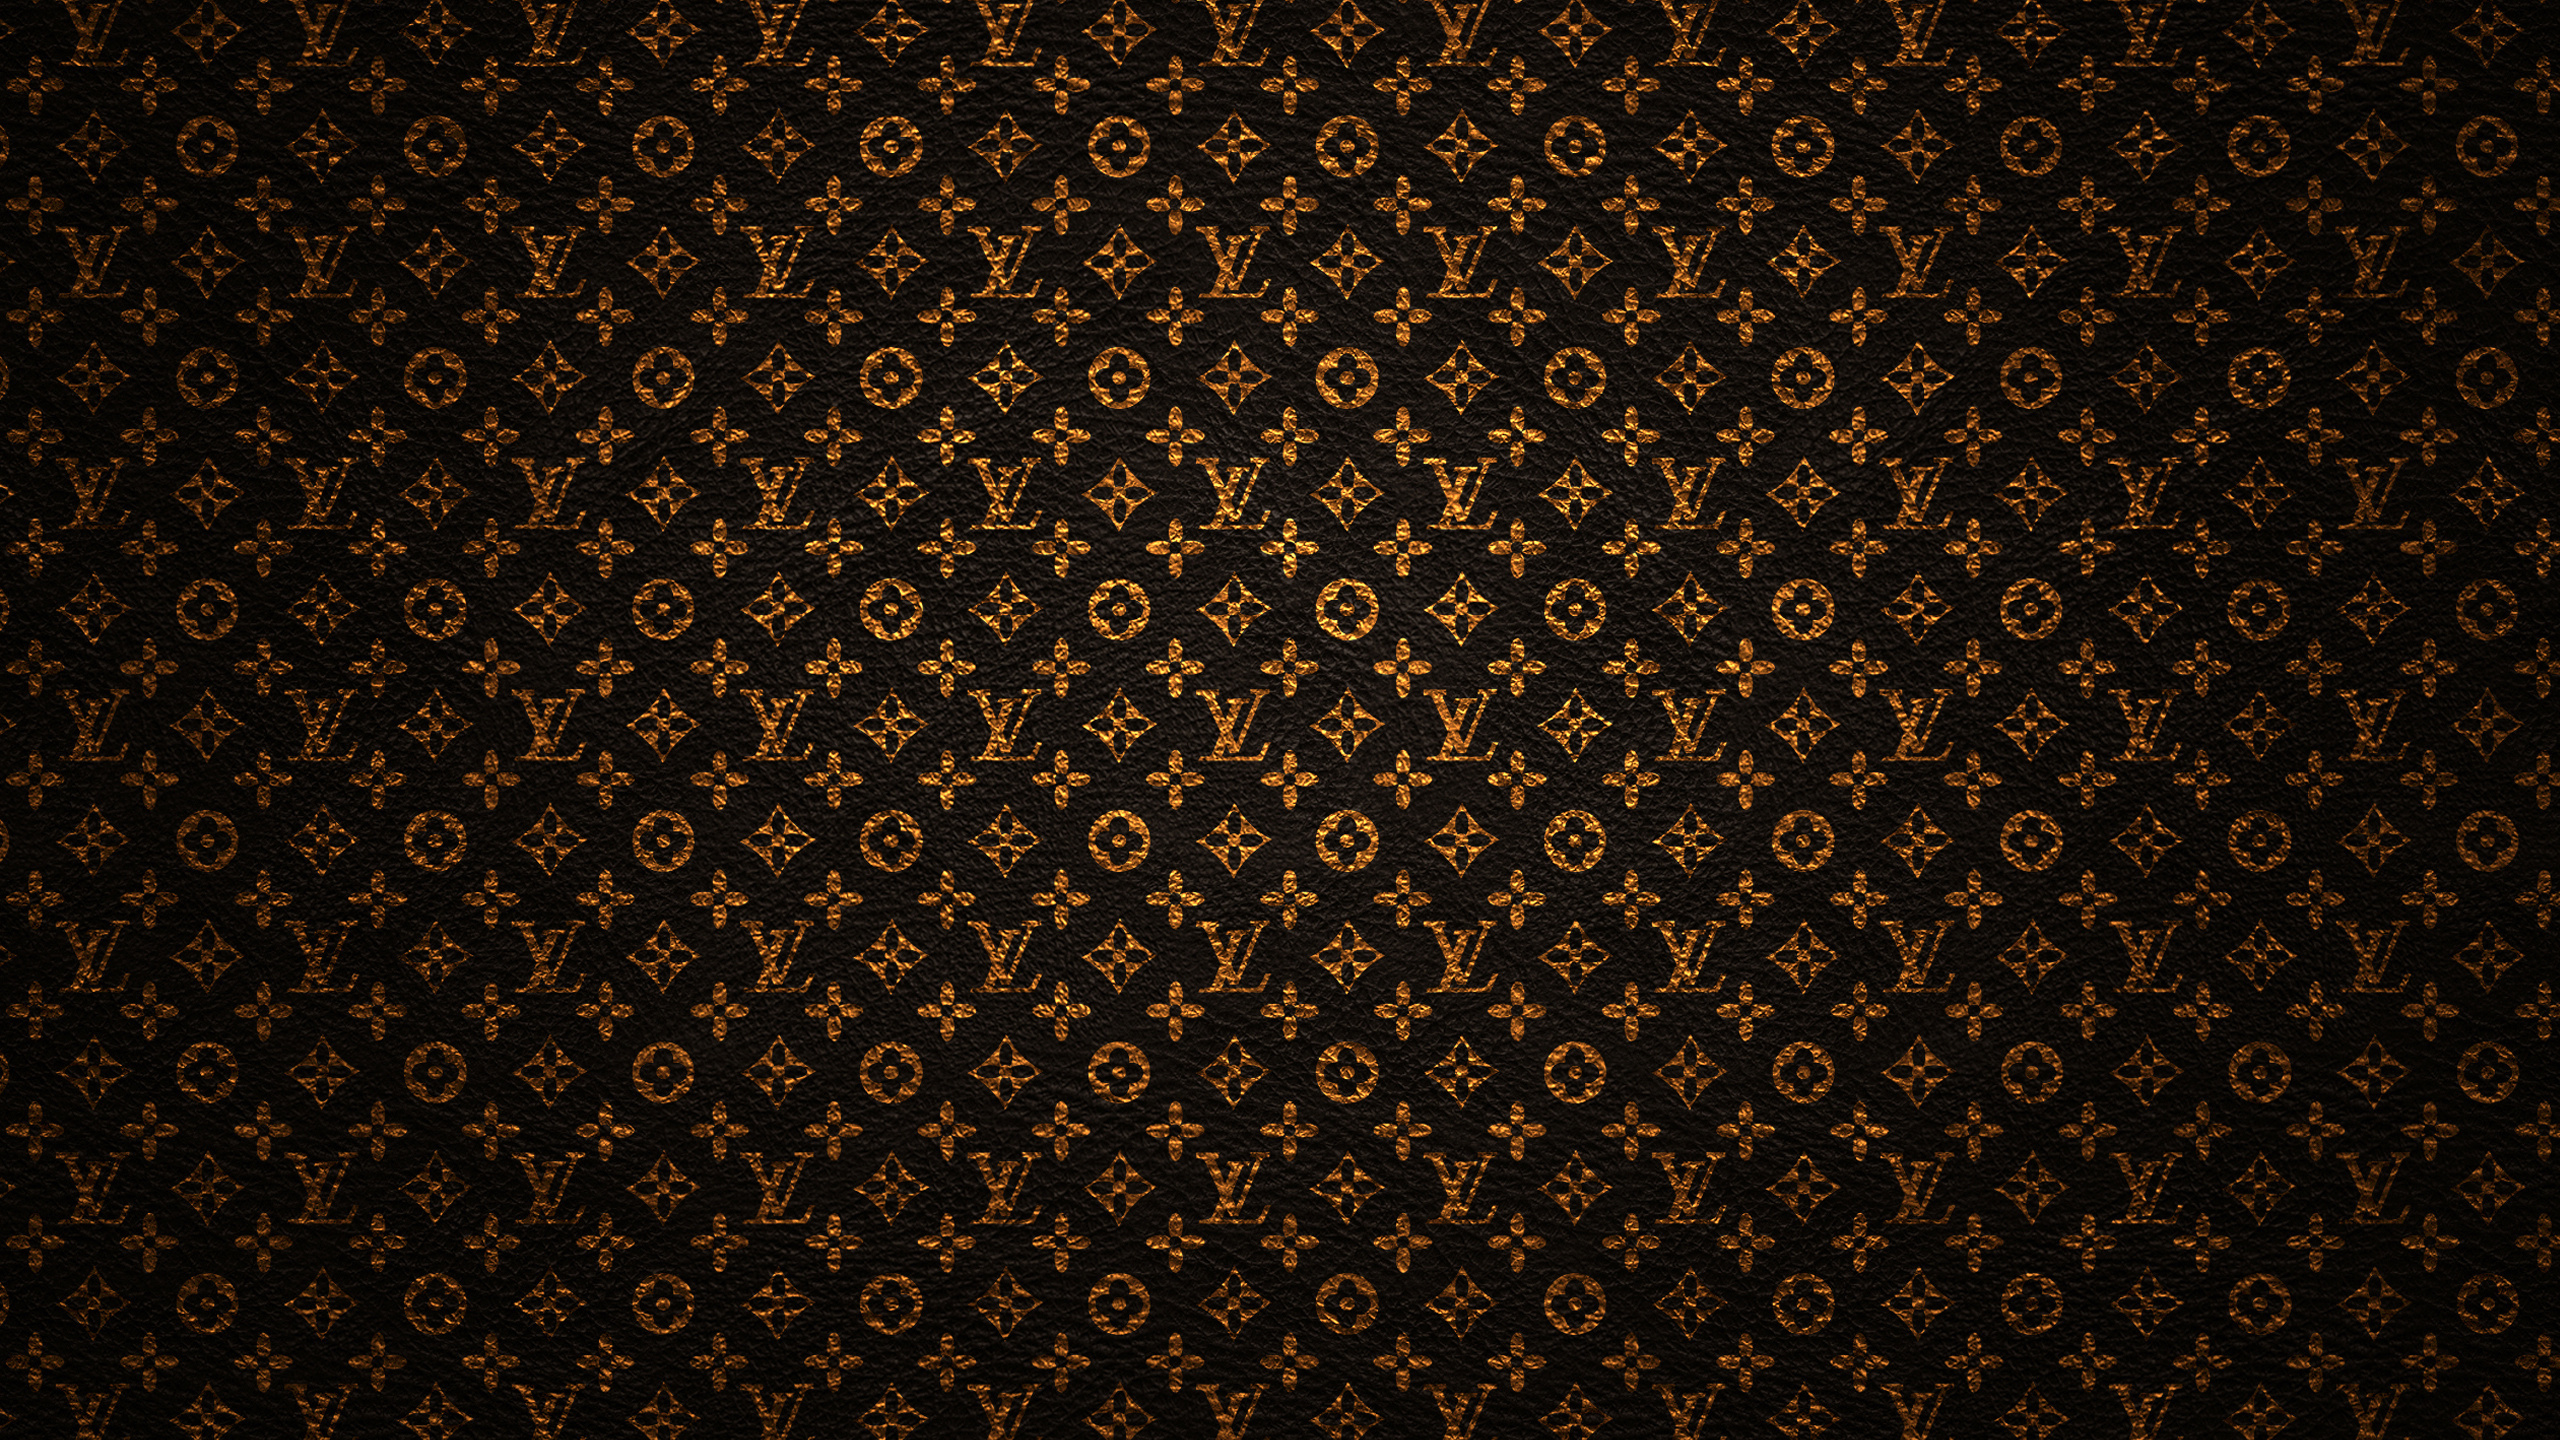 Louis Vuitton HD Wallpaper Background Image Id